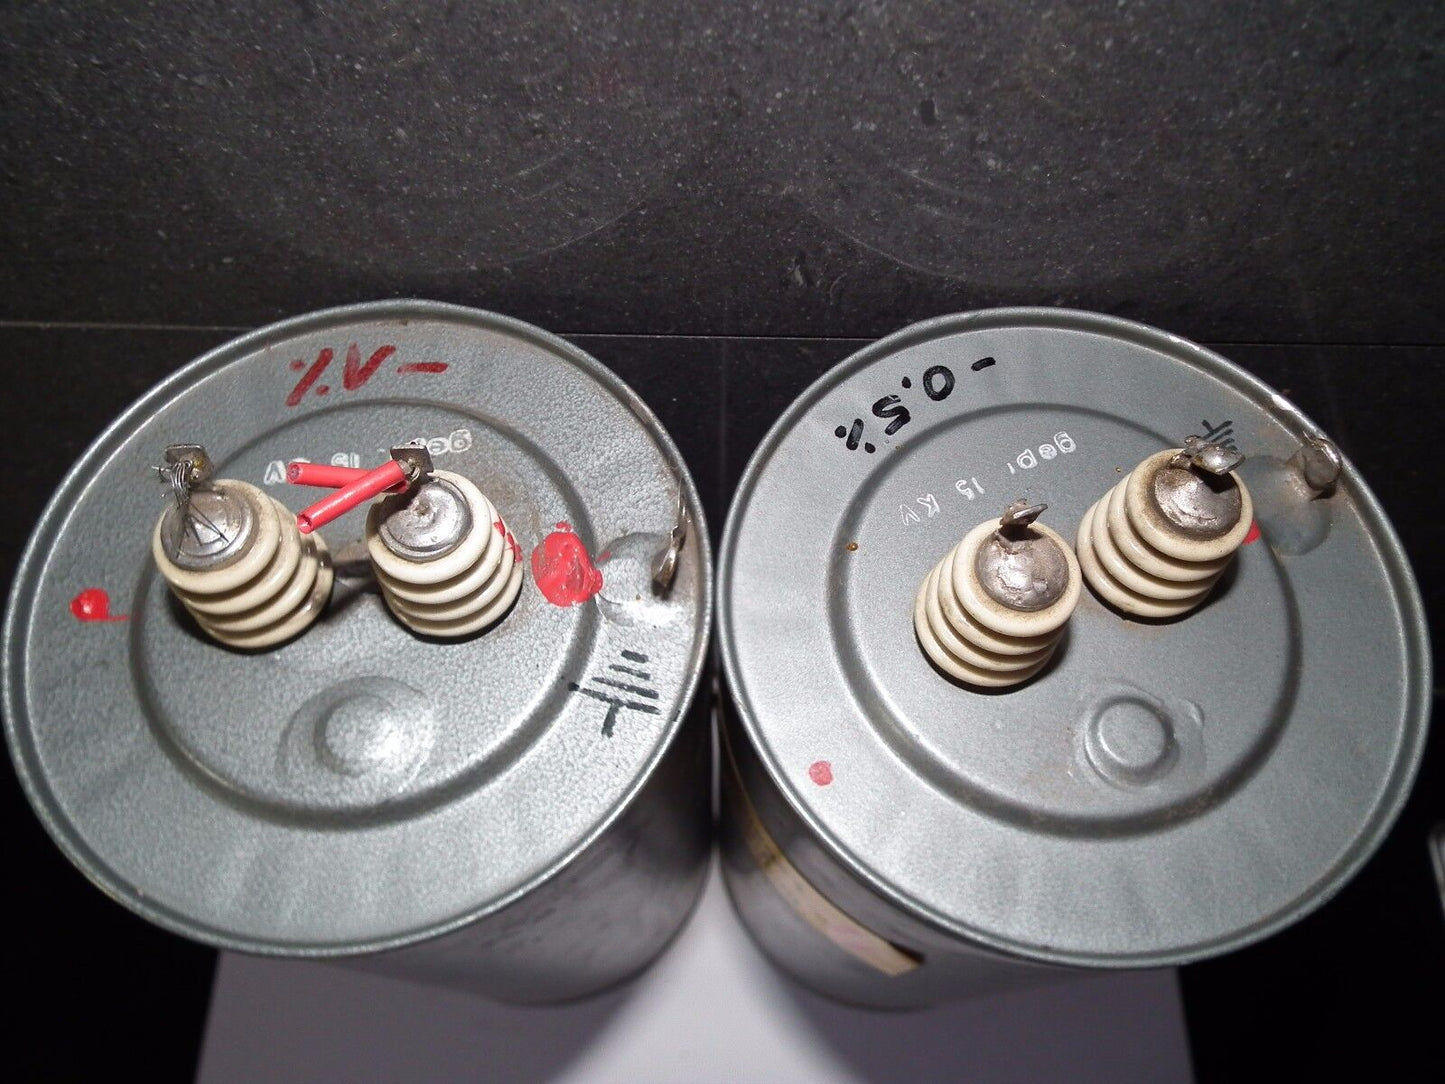 Two vintage ITT PIO capacitors 32 uF / 3.75KV 32mfd / 3.75KV W. Germany 1971